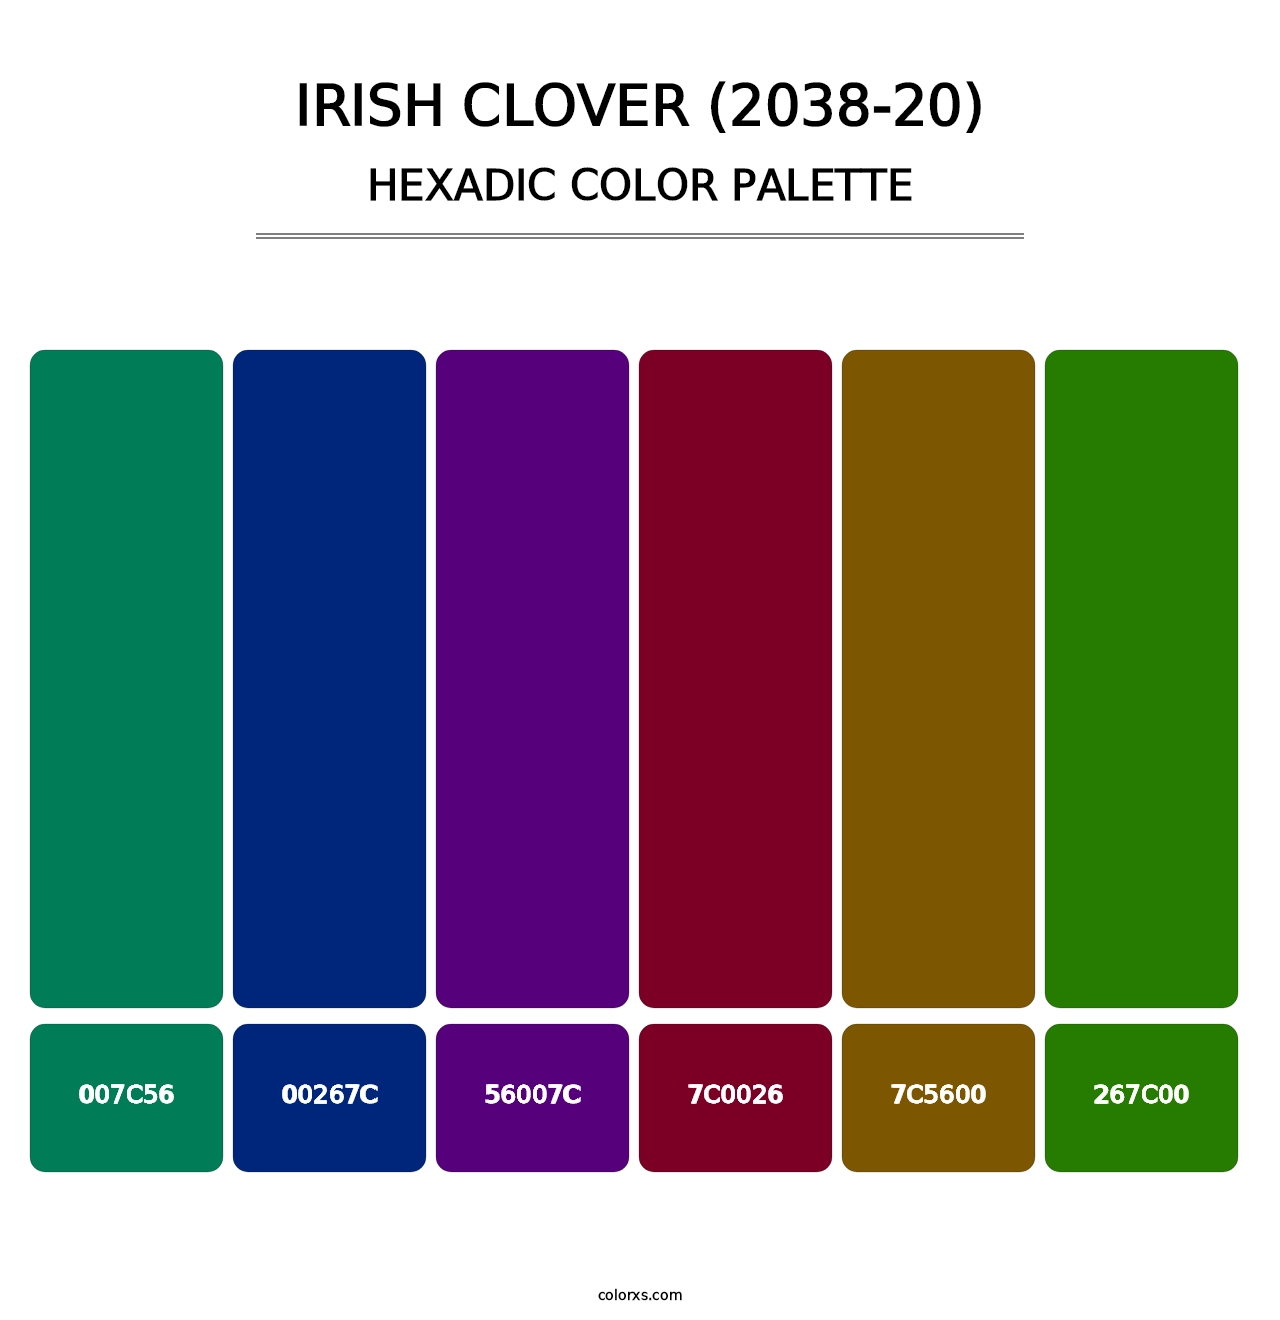 Irish Clover (2038-20) - Hexadic Color Palette